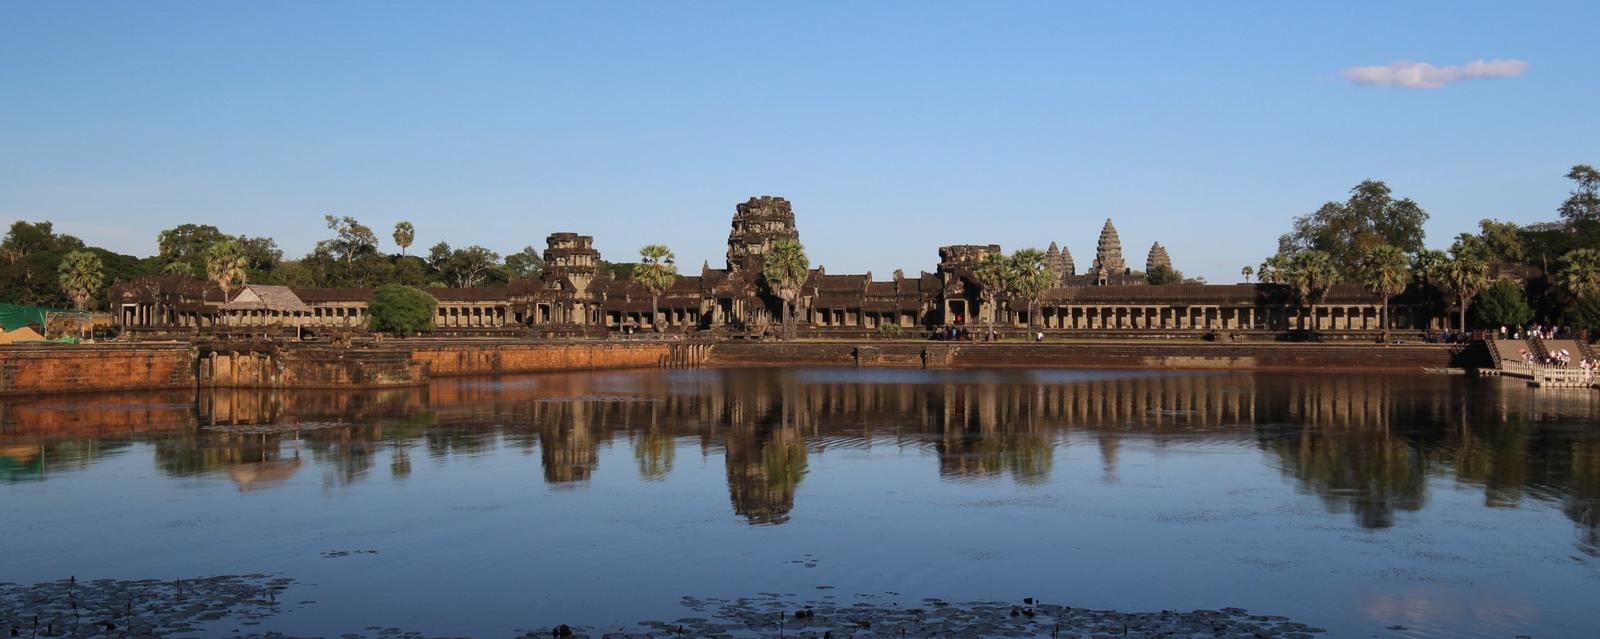 temple d'angkor vat cambodge audreyfario.com